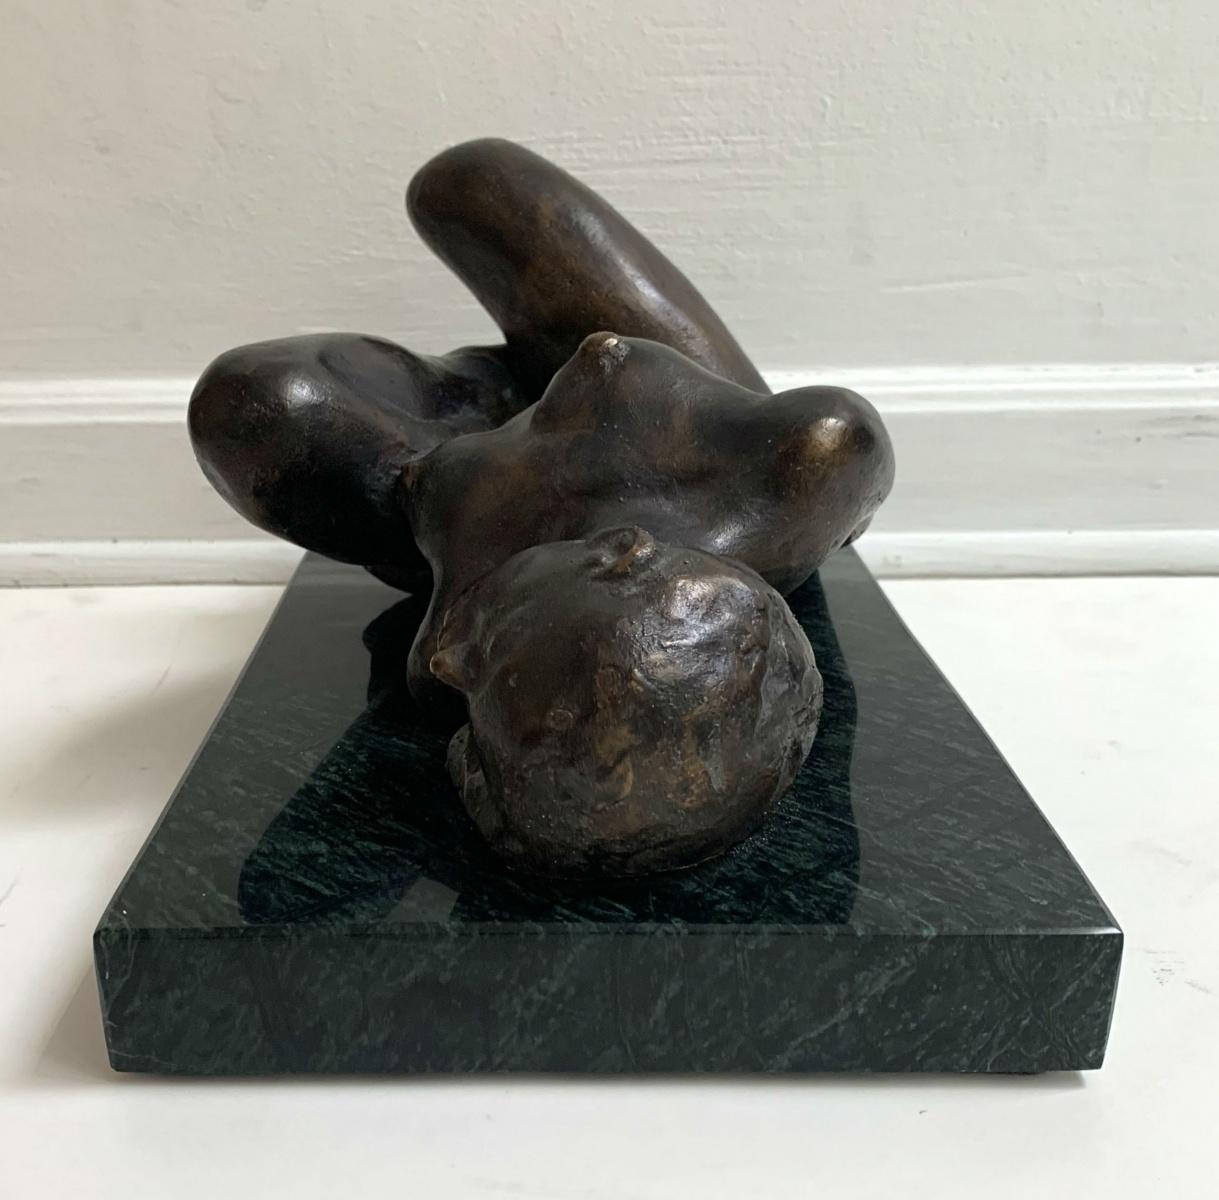 Woman - XXI century Contemporary figurative bronze sculpture, Classical, Realism - Gold Nude Sculpture by Ryszard Piotrowski